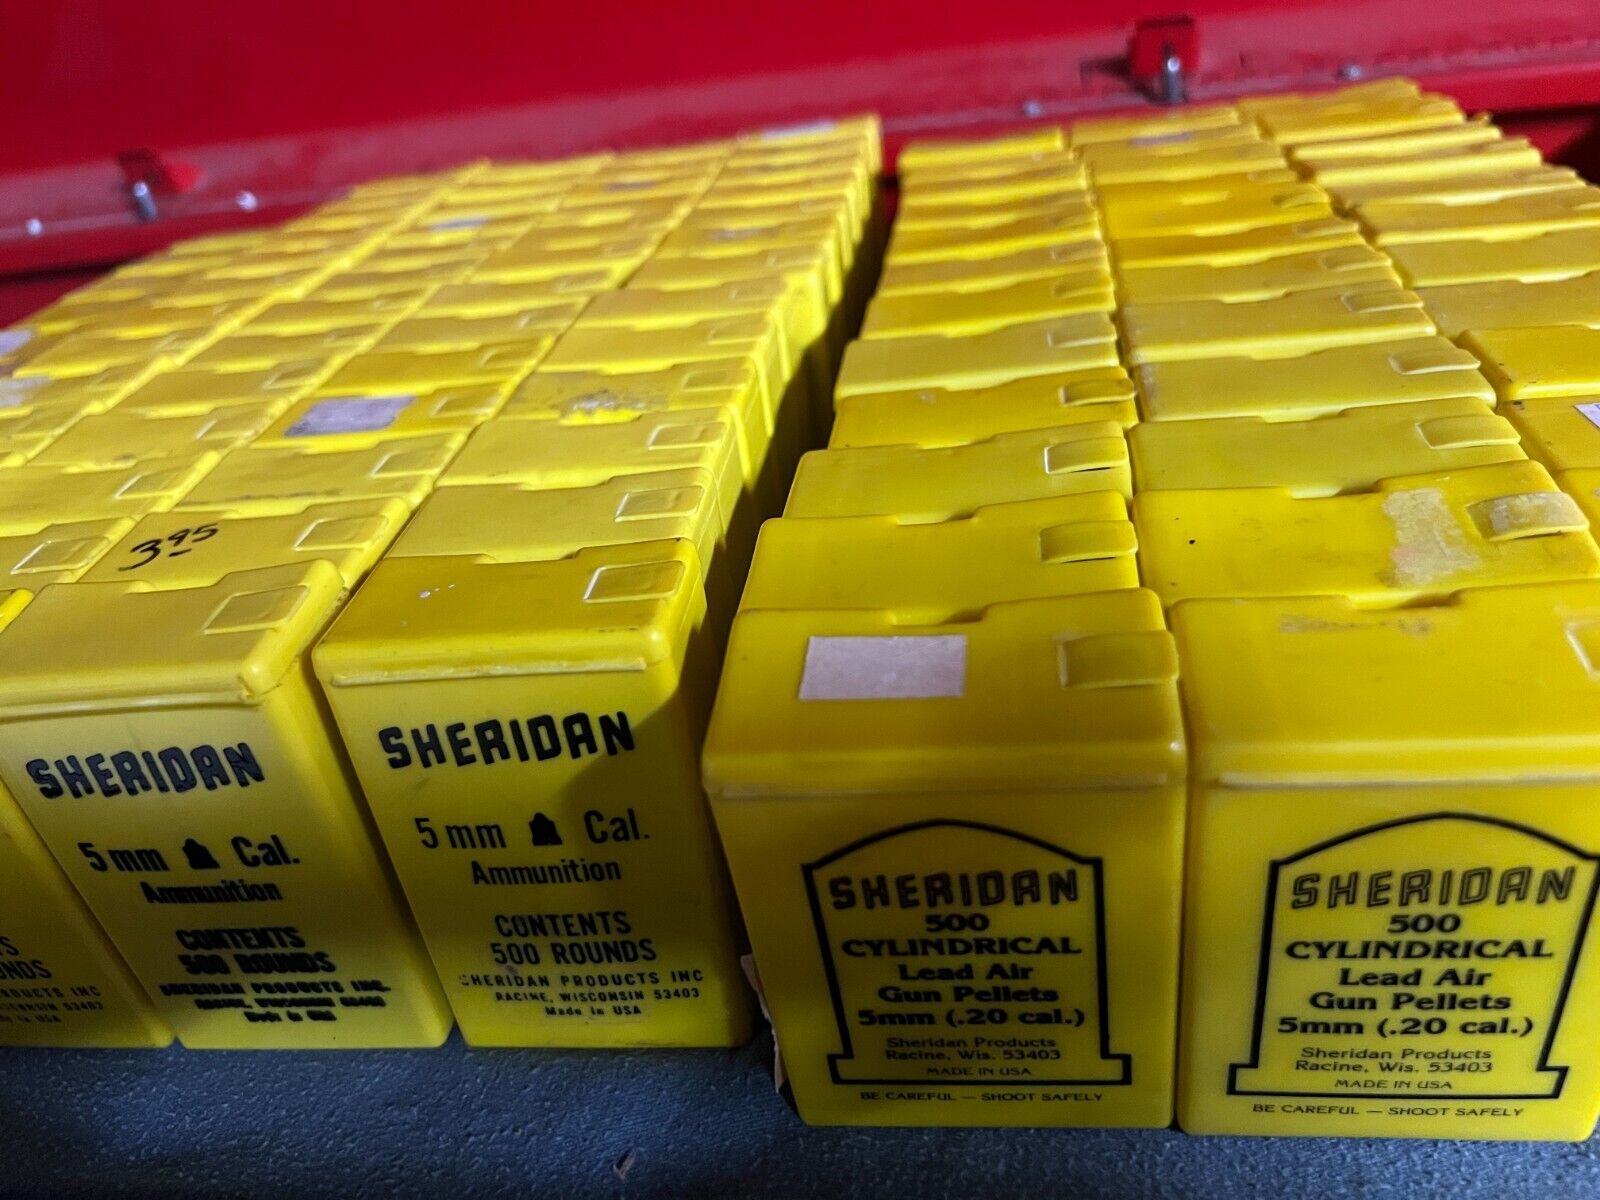 Brand New Vintage Sheridan 5mm/.20cal Air Gun Pellets-Yellow Container-FULL